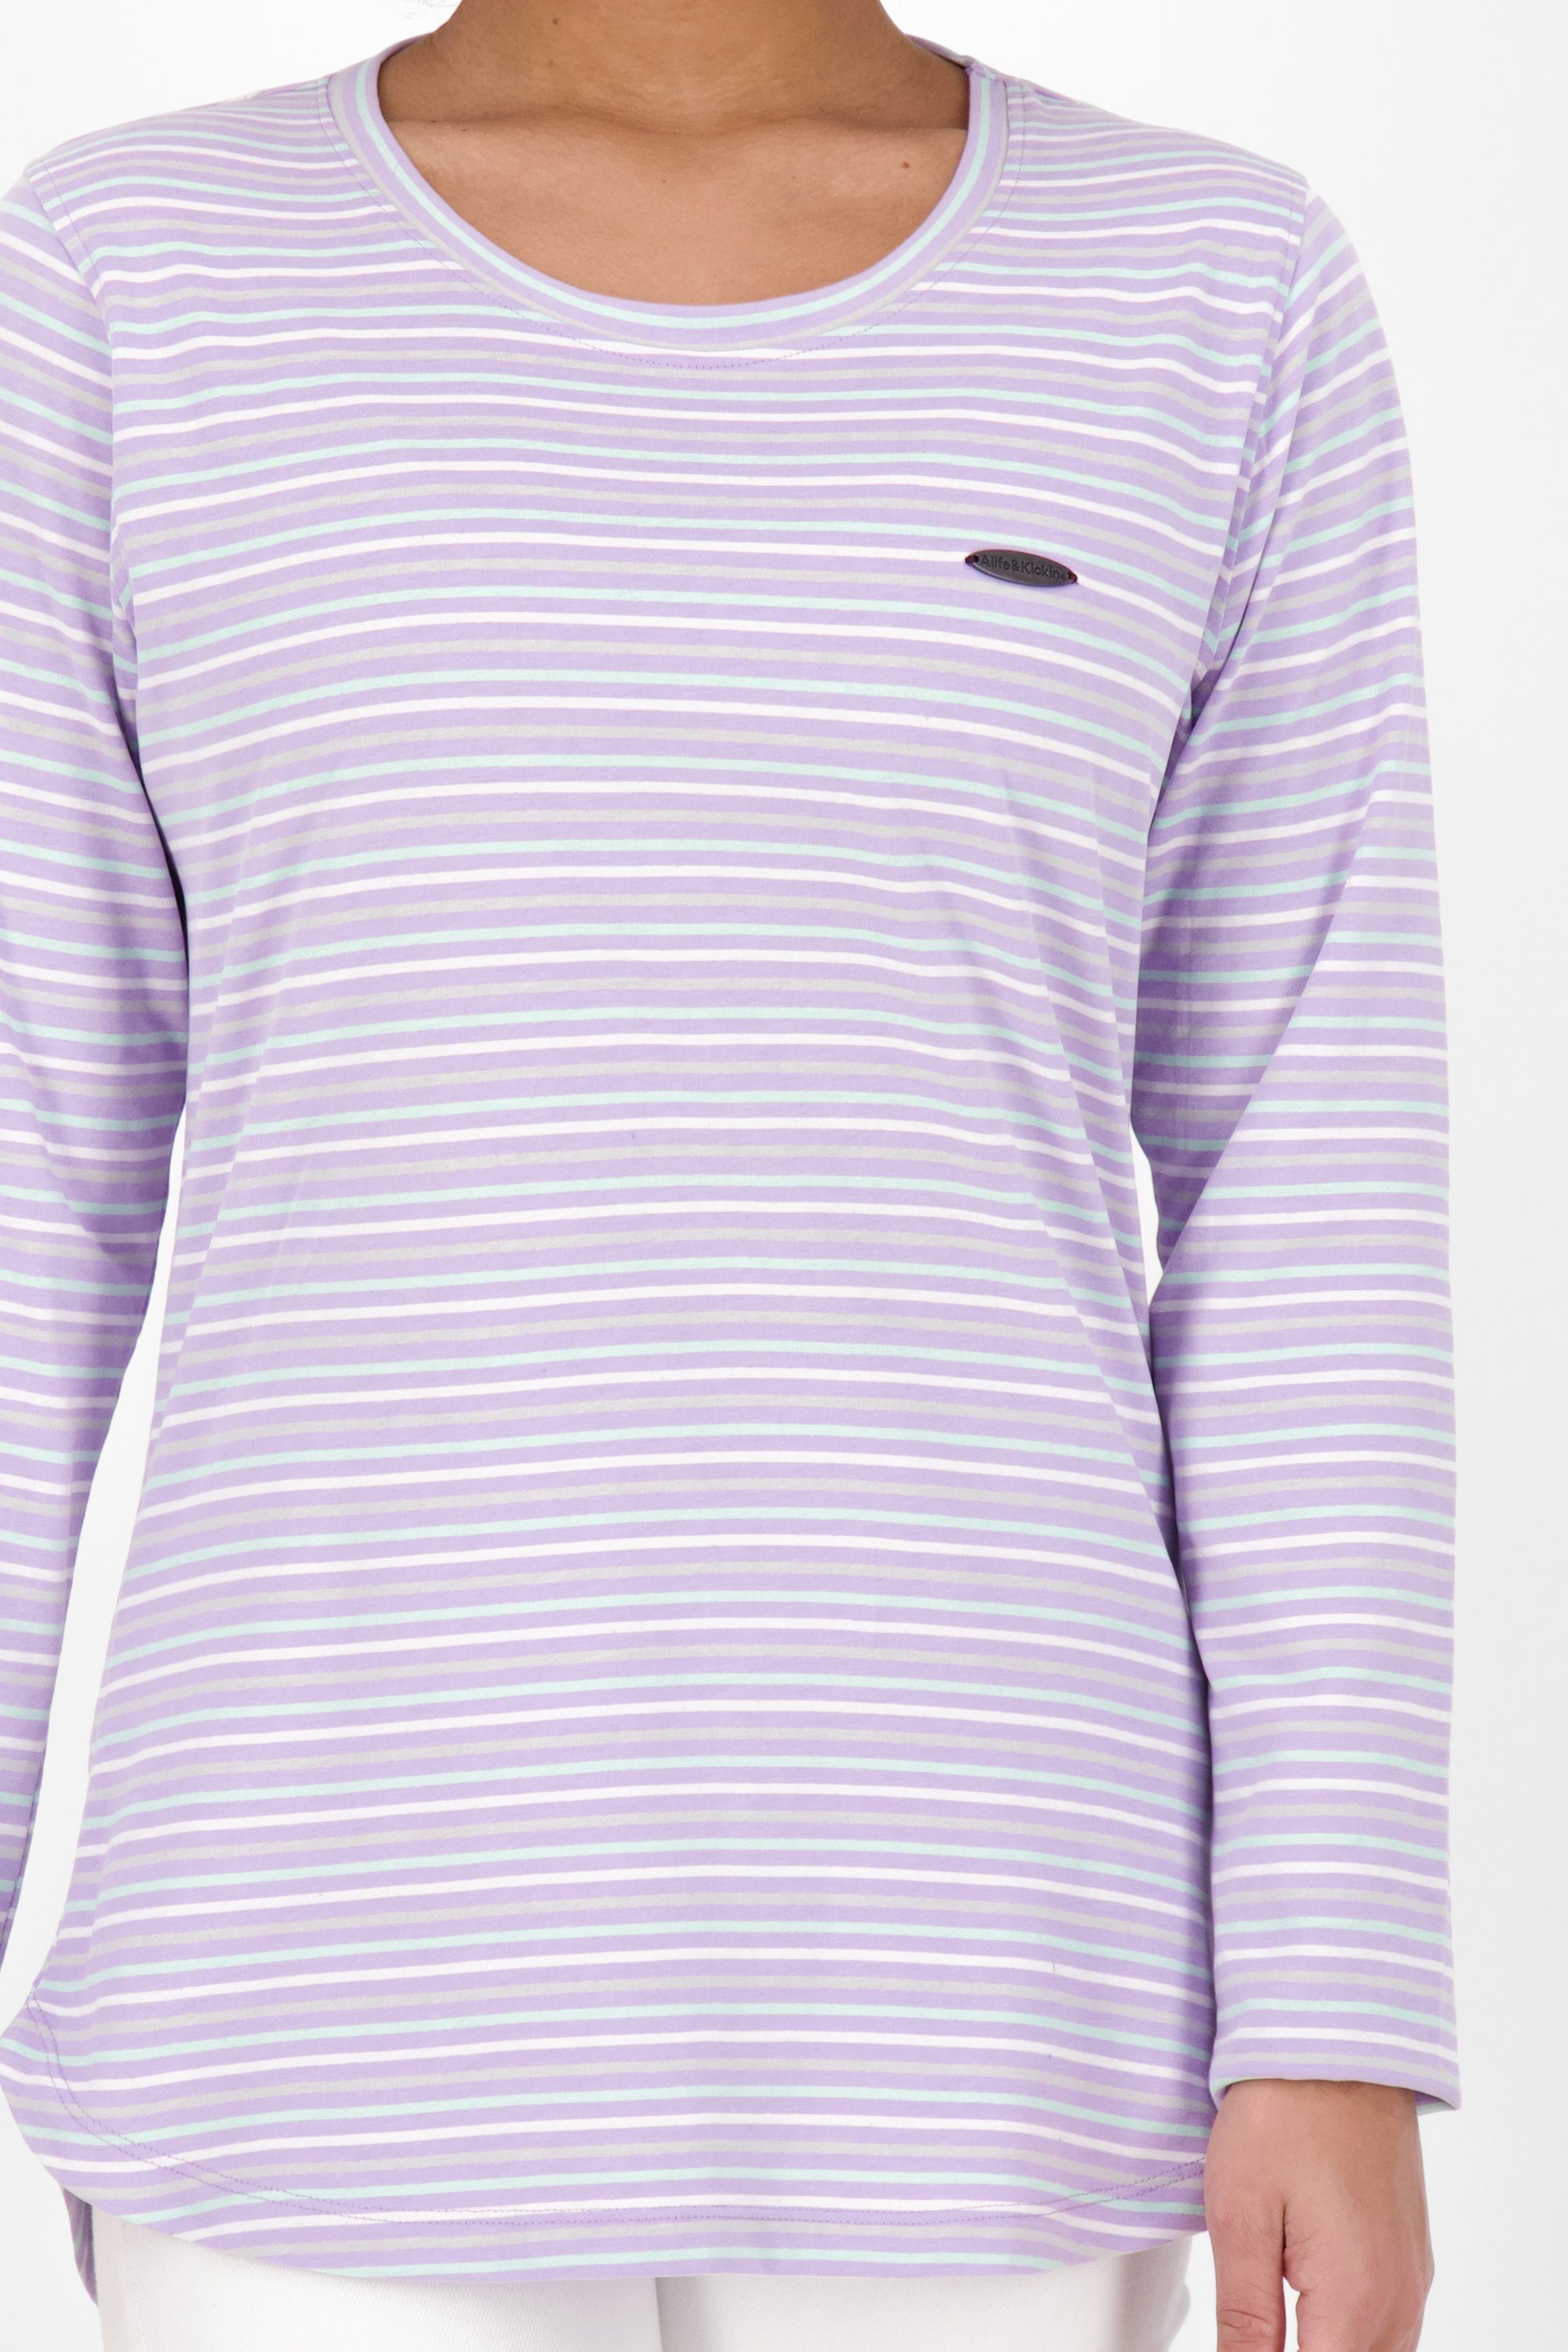 Alife & Kickin Langarmshirt LeaAK Langarmshirt, Damen Longsleeve Shirt Z lavender digital